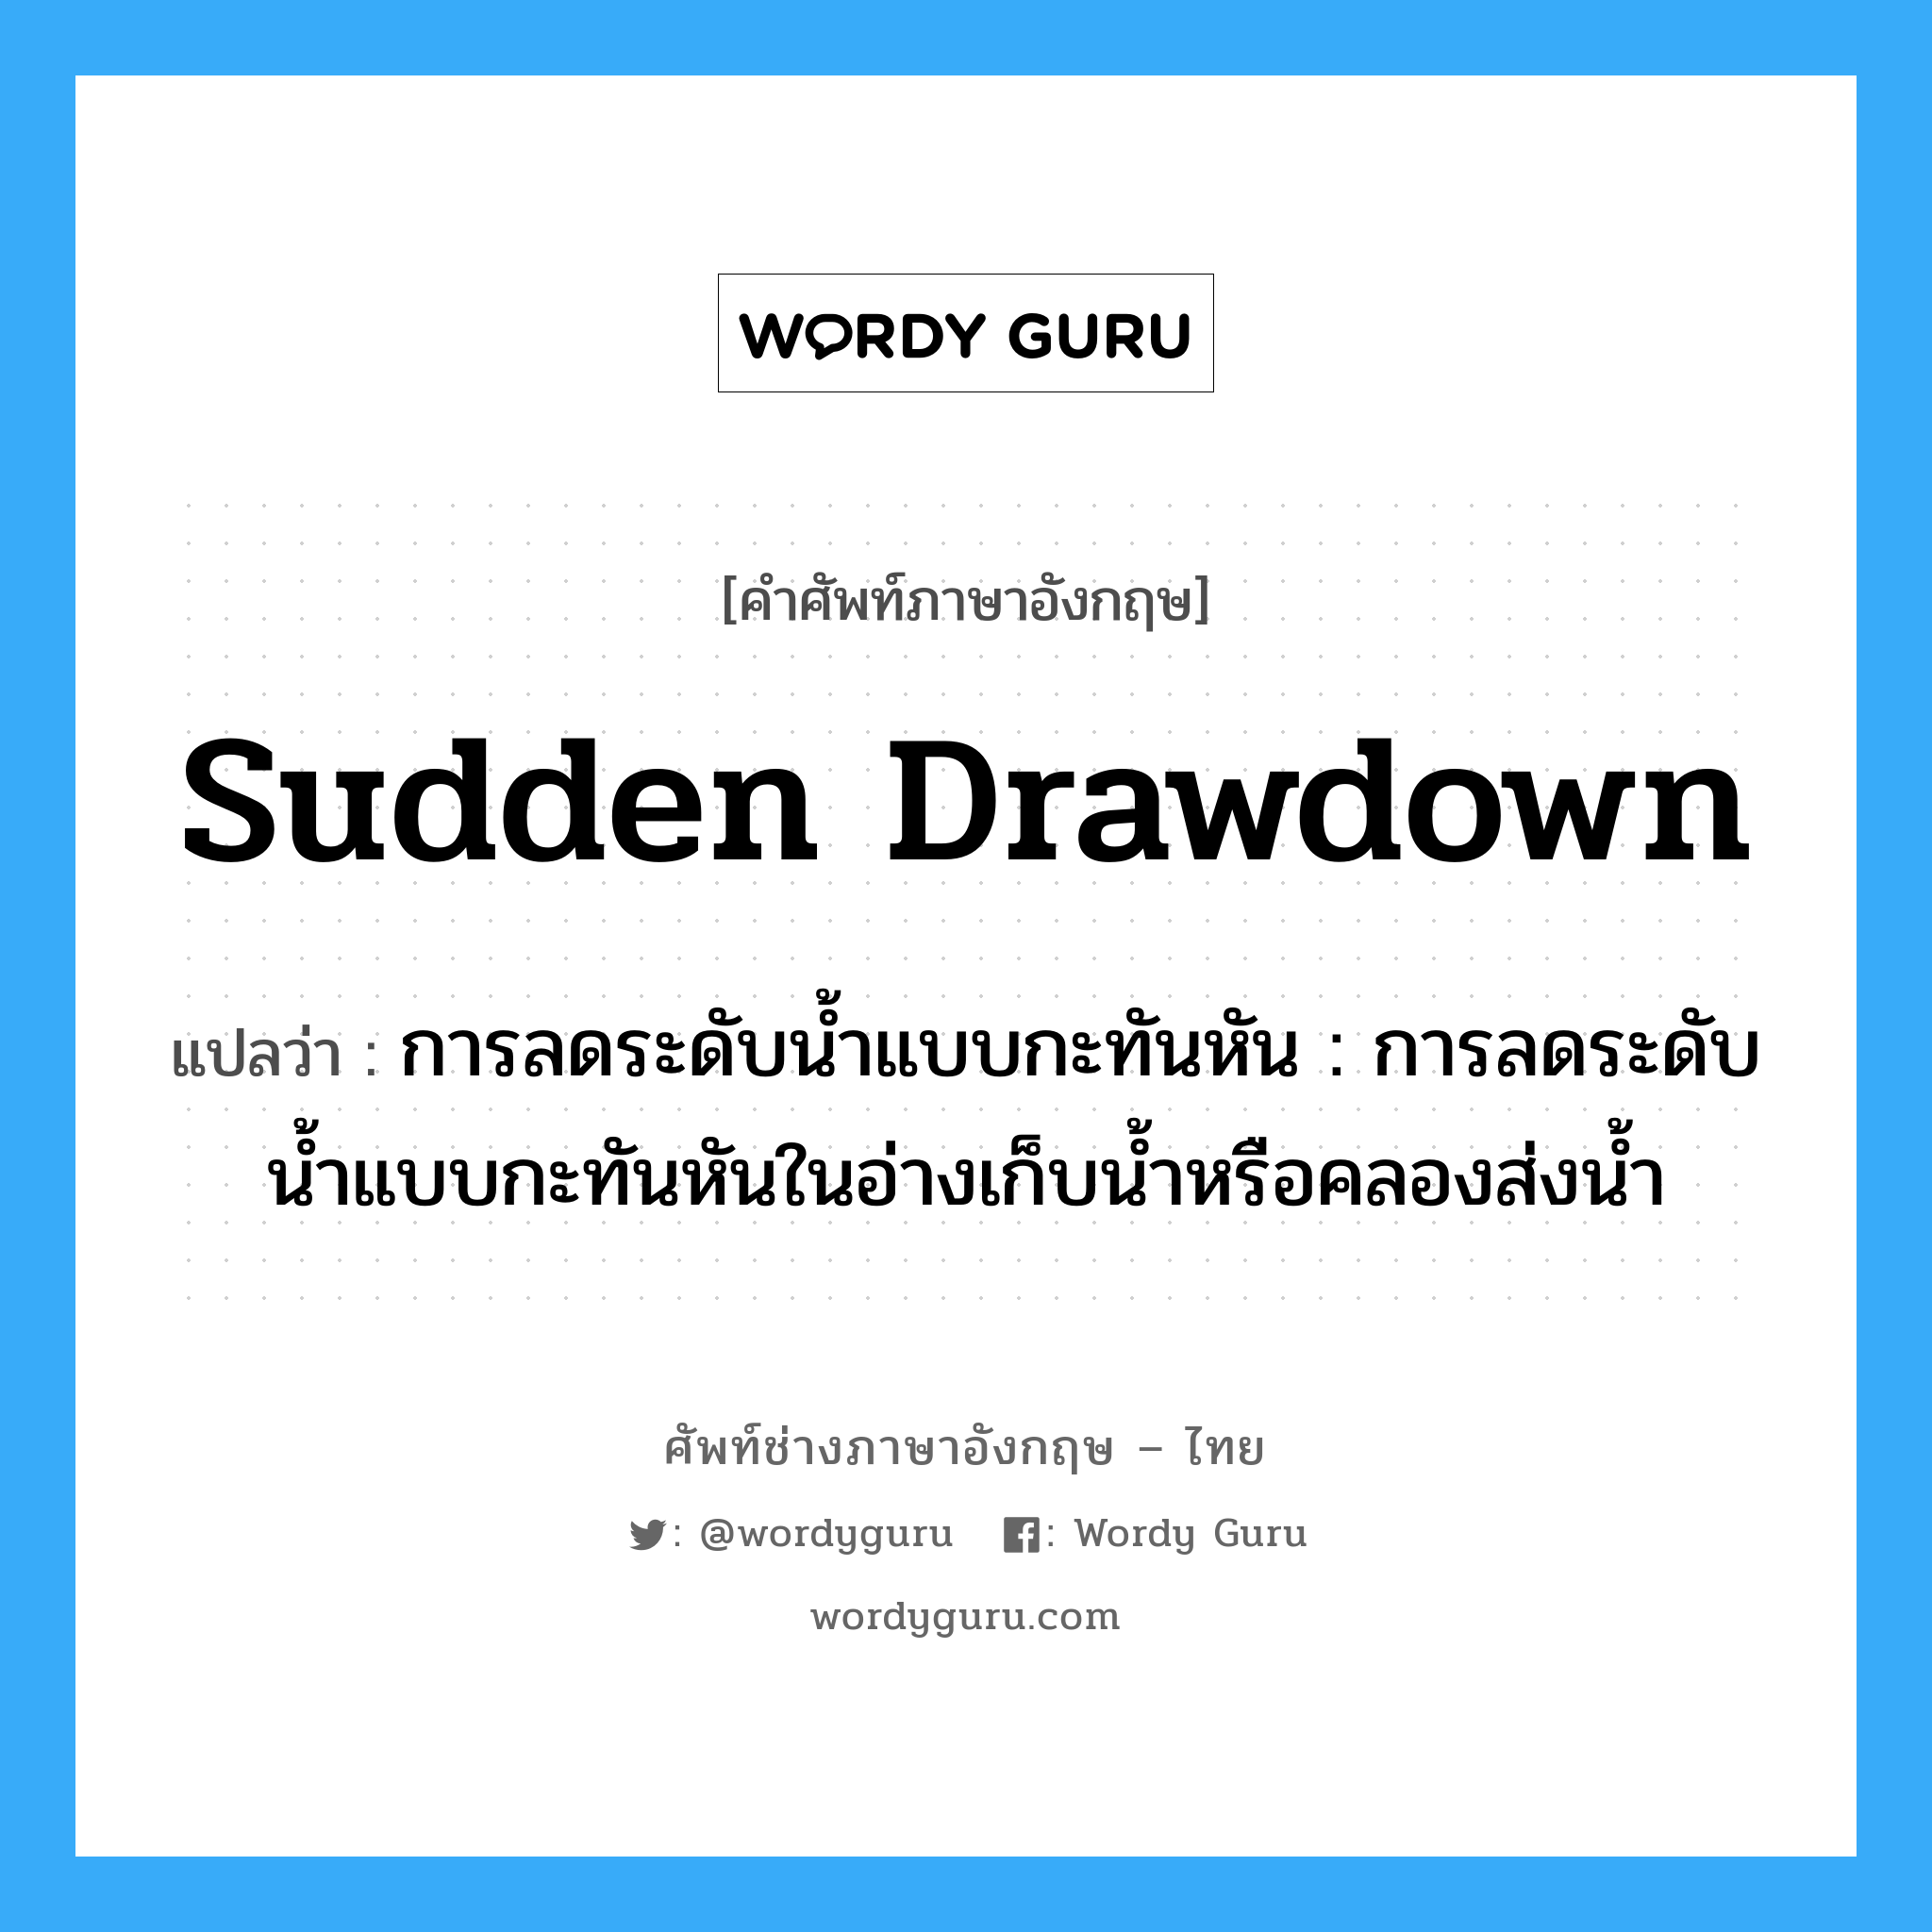 sudden drawdown แปลว่า?, คำศัพท์ช่างภาษาอังกฤษ - ไทย sudden drawdown คำศัพท์ภาษาอังกฤษ sudden drawdown แปลว่า การลดระดับน้ำแบบกะทันหัน : การลดระดับน้ำแบบกะทันหันในอ่างเก็บน้ำหรือคลองส่งน้ำ